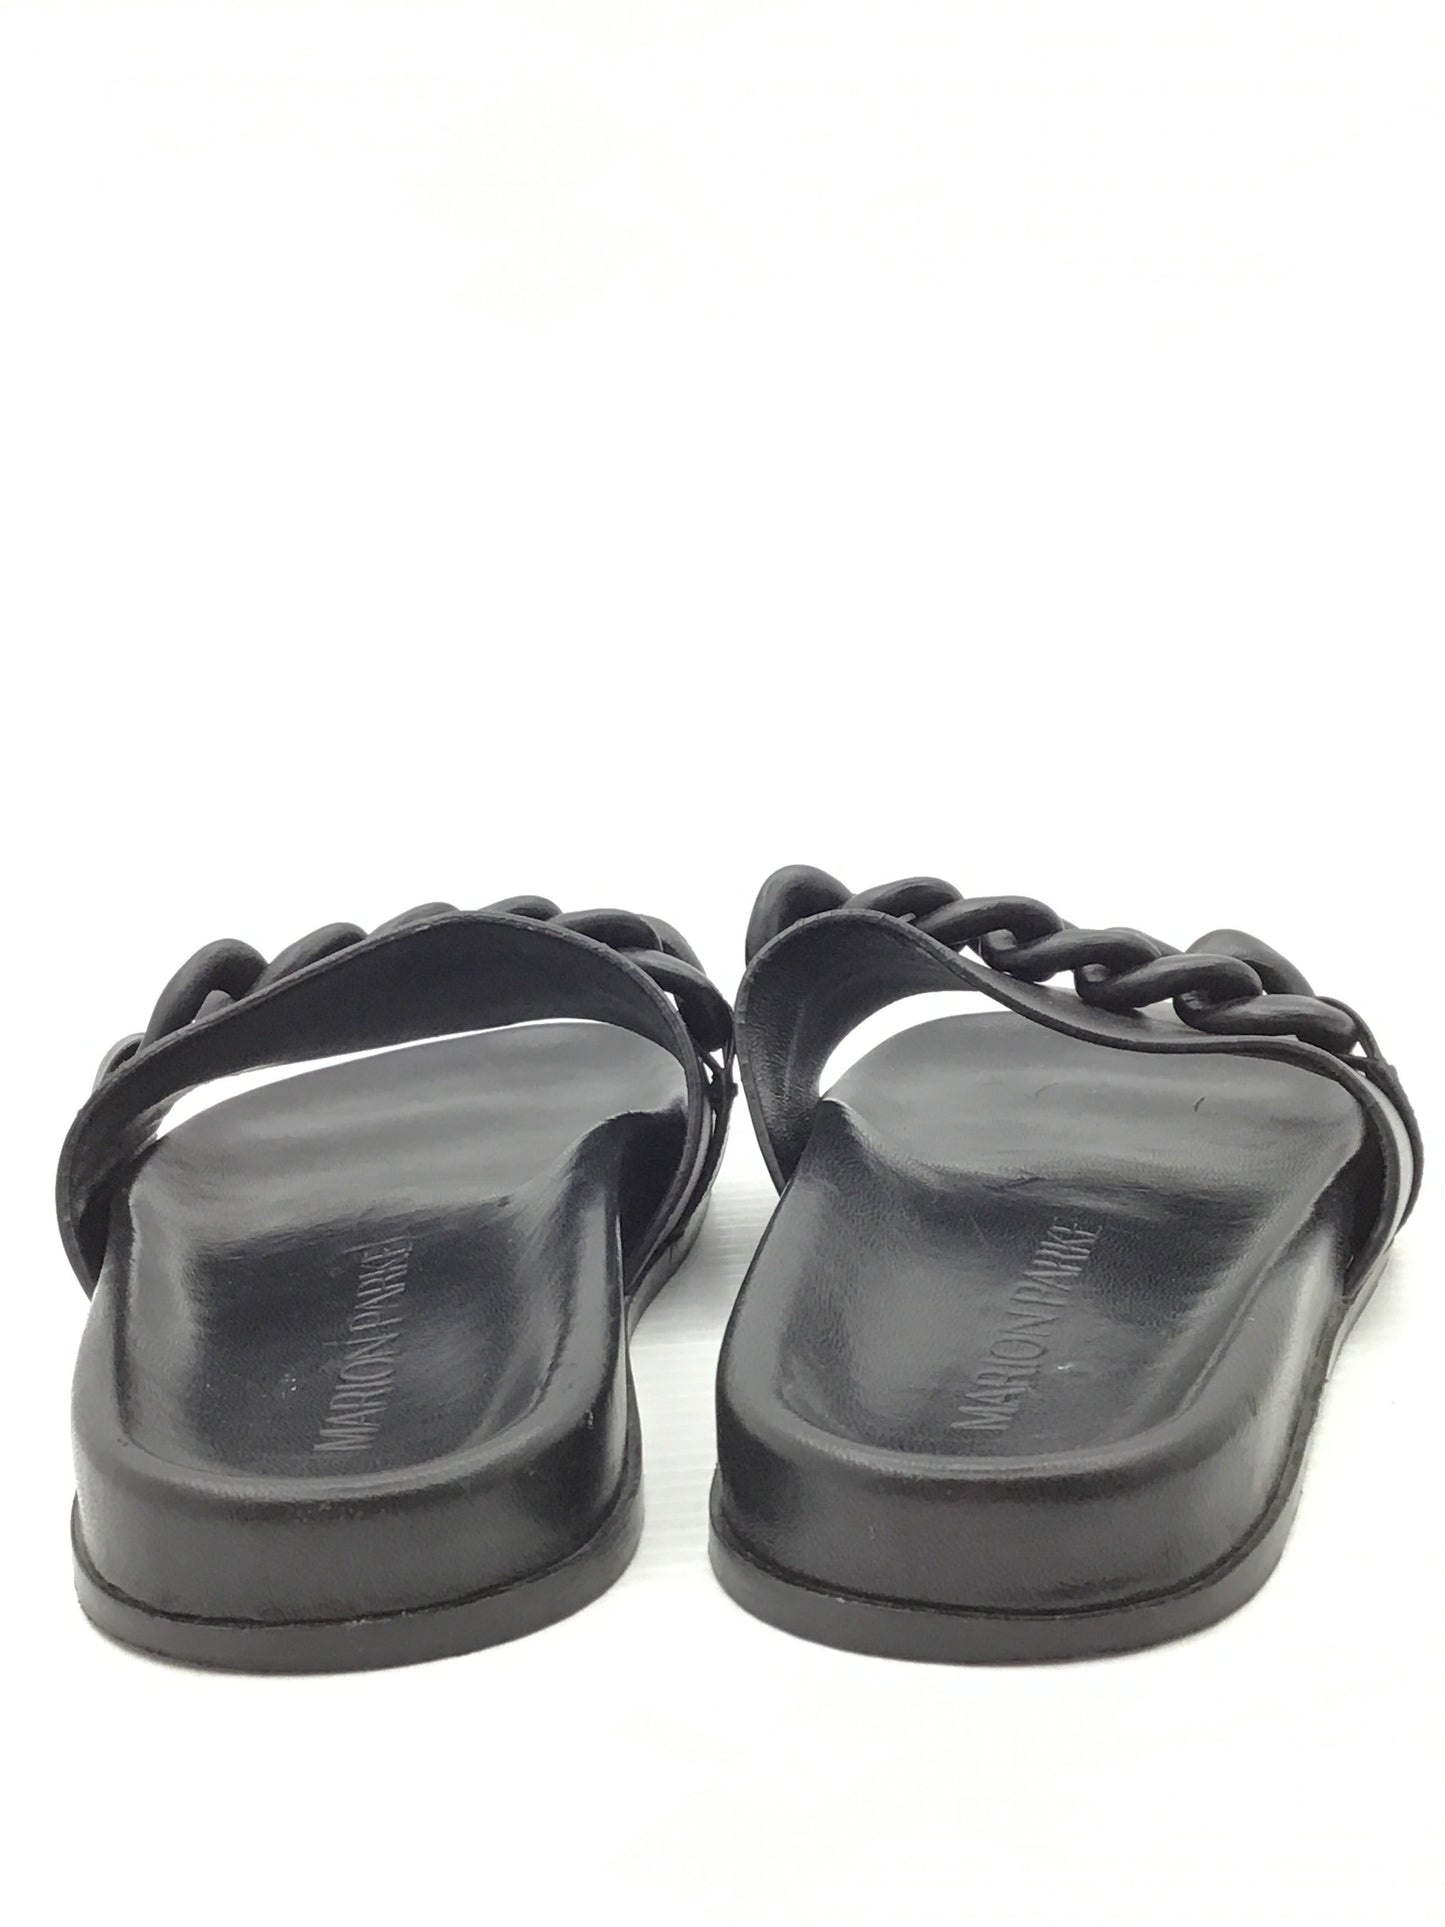 Sandals Flip Flops By Cma  Size: 8